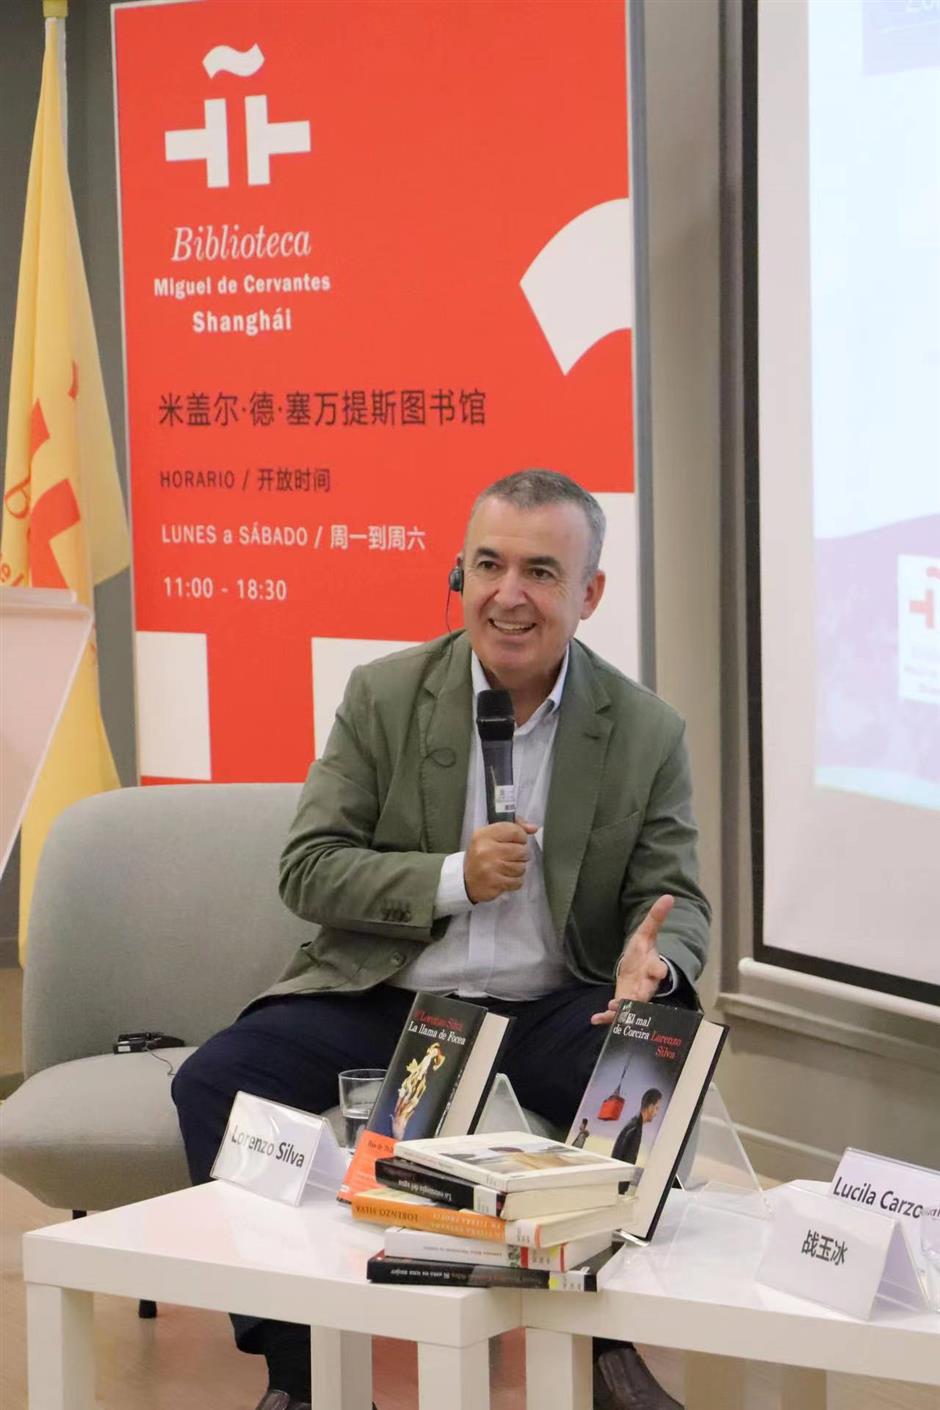 Award-winning Spanish author opens book on his writings